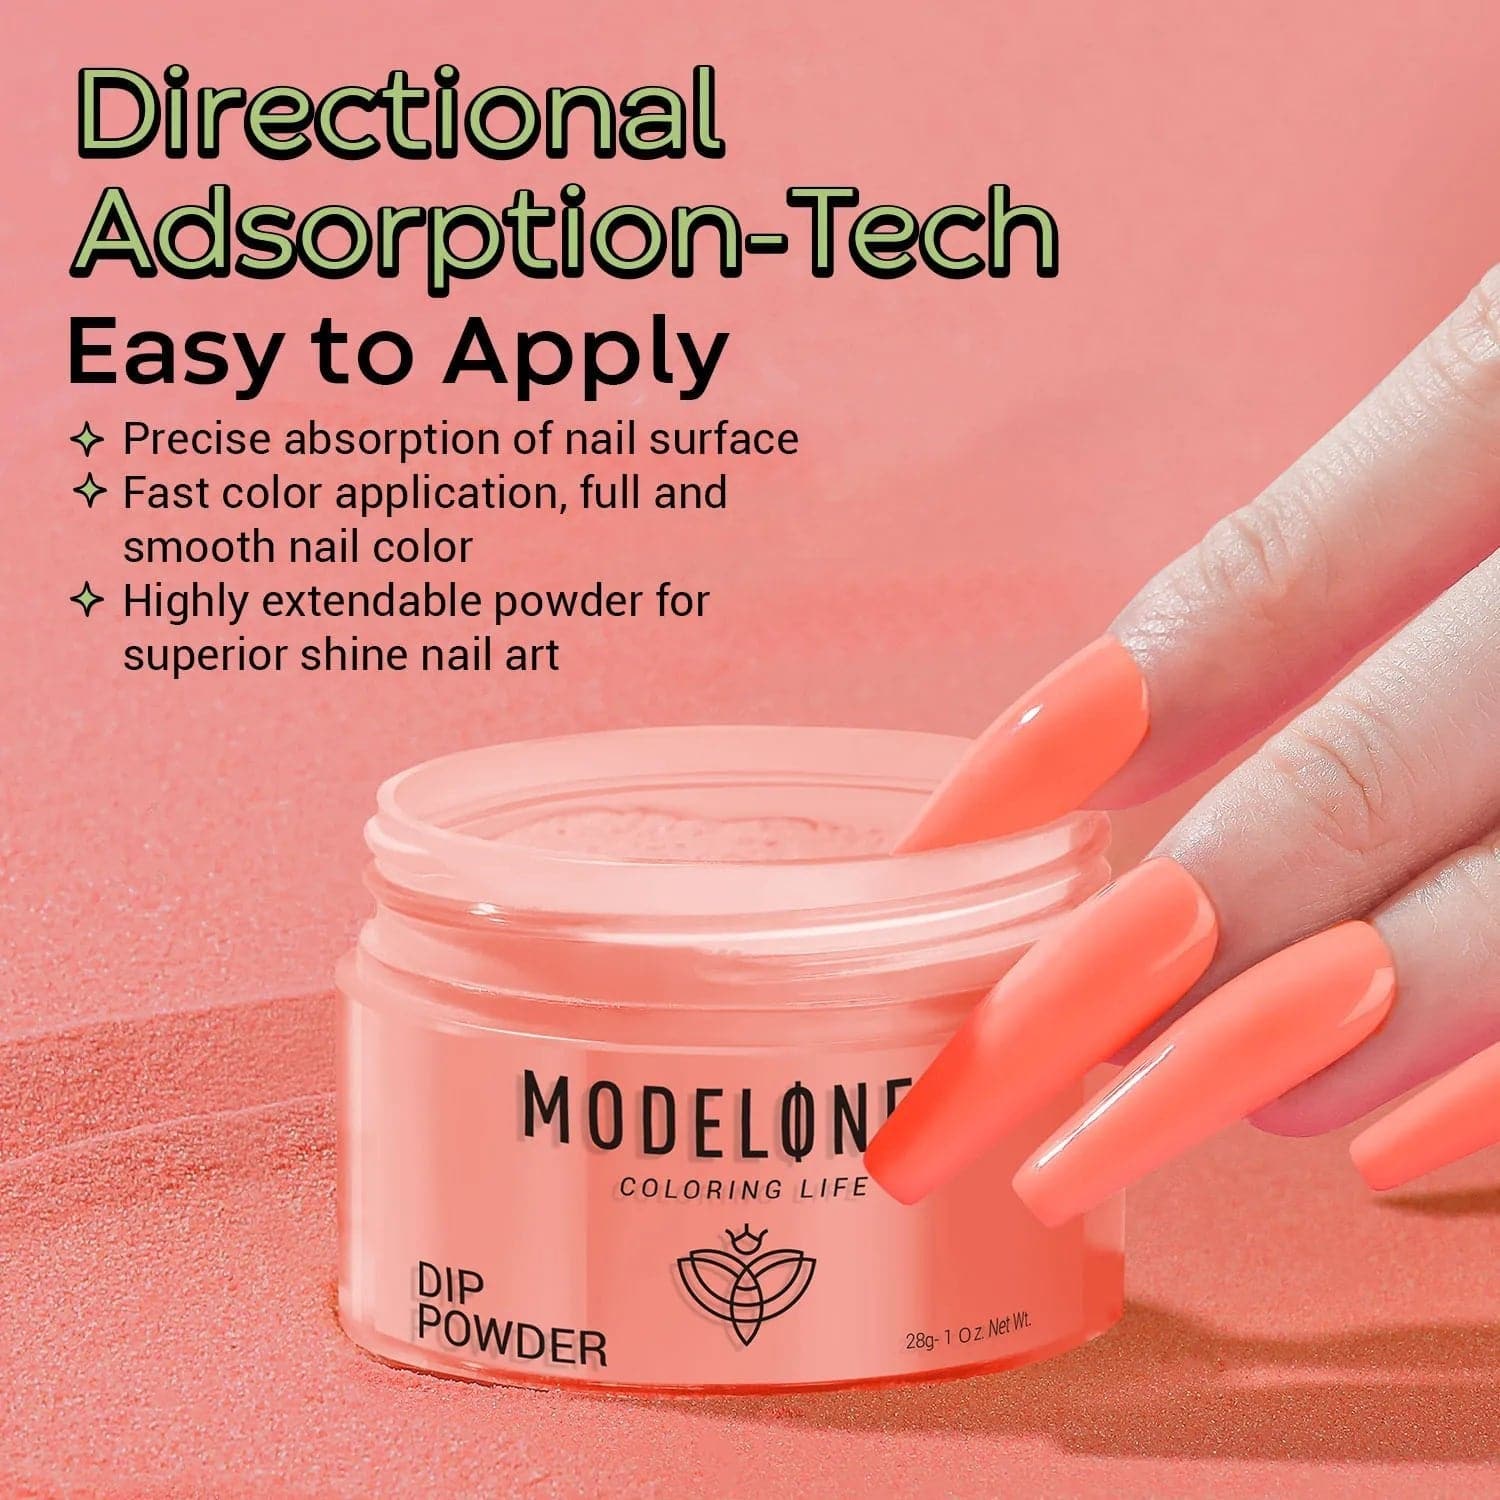 Colored Acrylic / Dip Powder 1 oz - Nail Tech Supplies - Wholesale